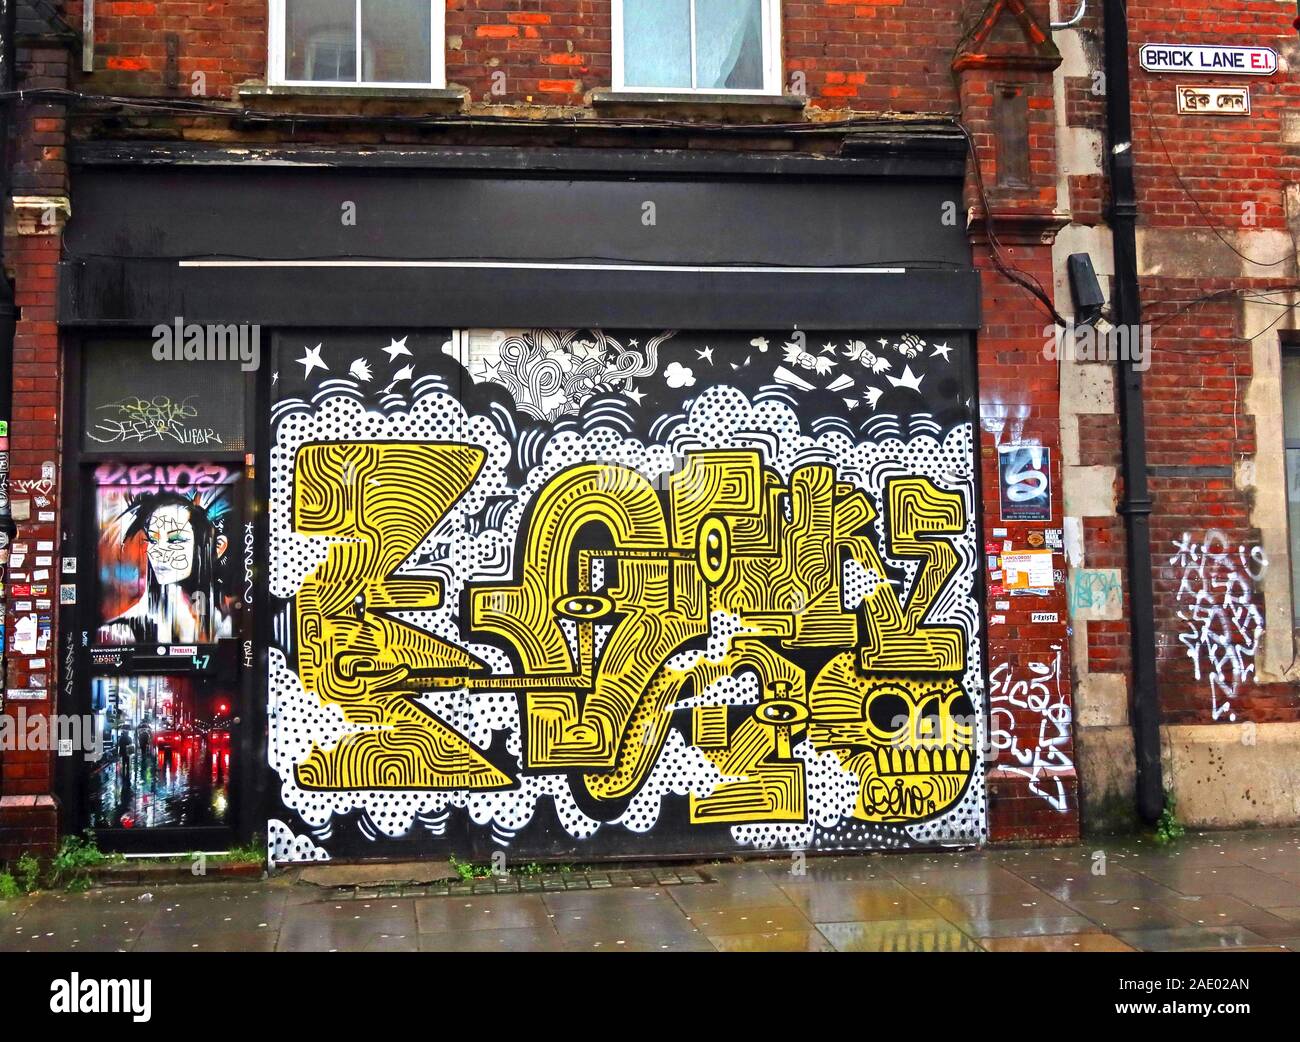 Shop Front, Brick Lane, Kunst und Graffiti, Shoreditch, Tower Hamlets, East End, London, Südosten, England, Großbritannien, E1 6QL Stockfoto